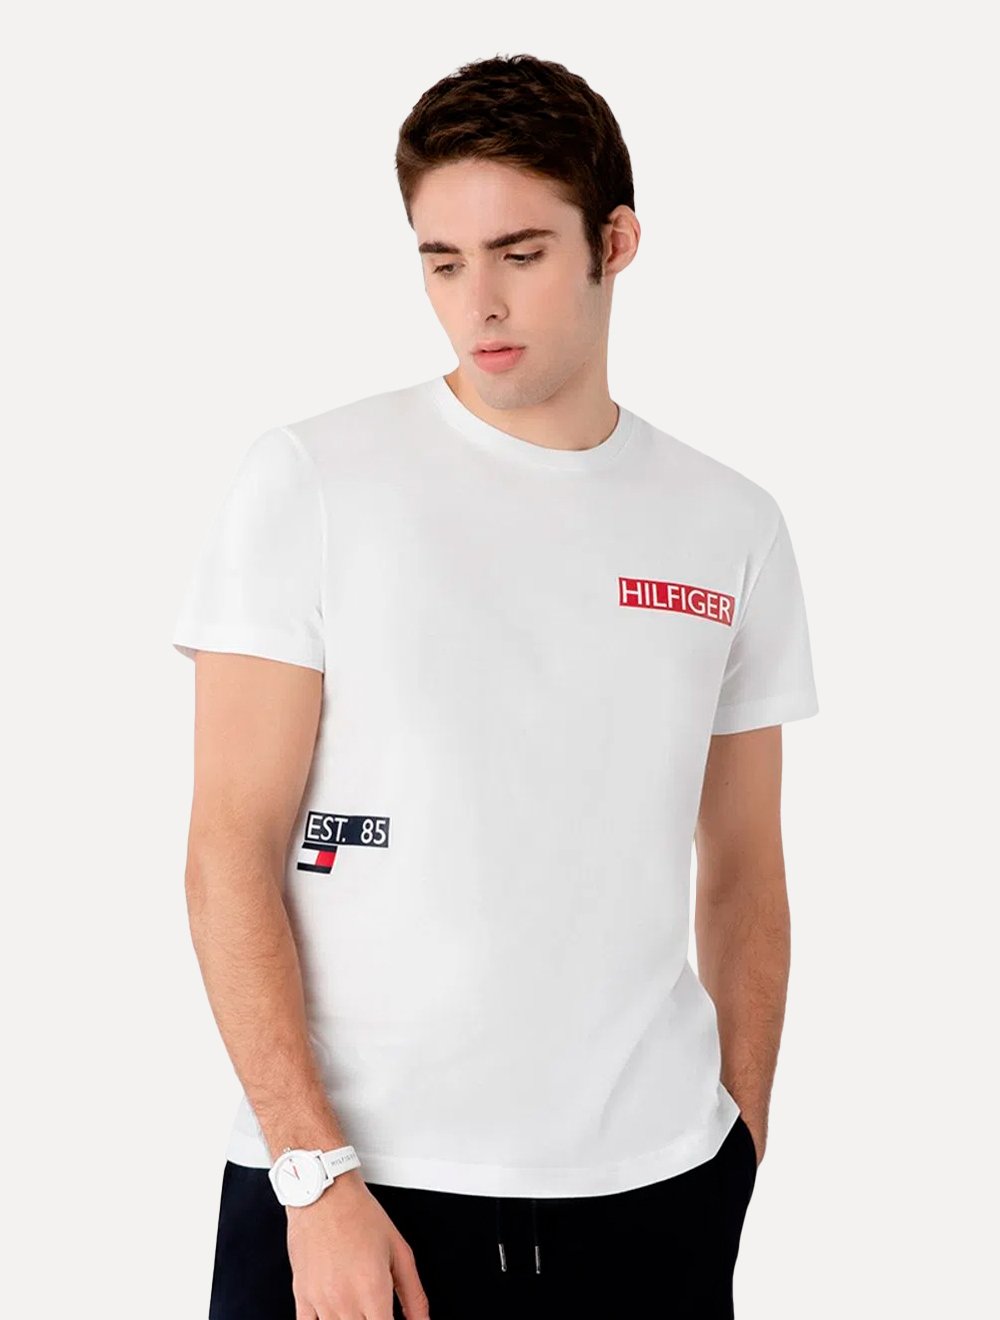 Camiseta Polo Tommy Hilfiger Estampada Branca - Estilo e Elegância